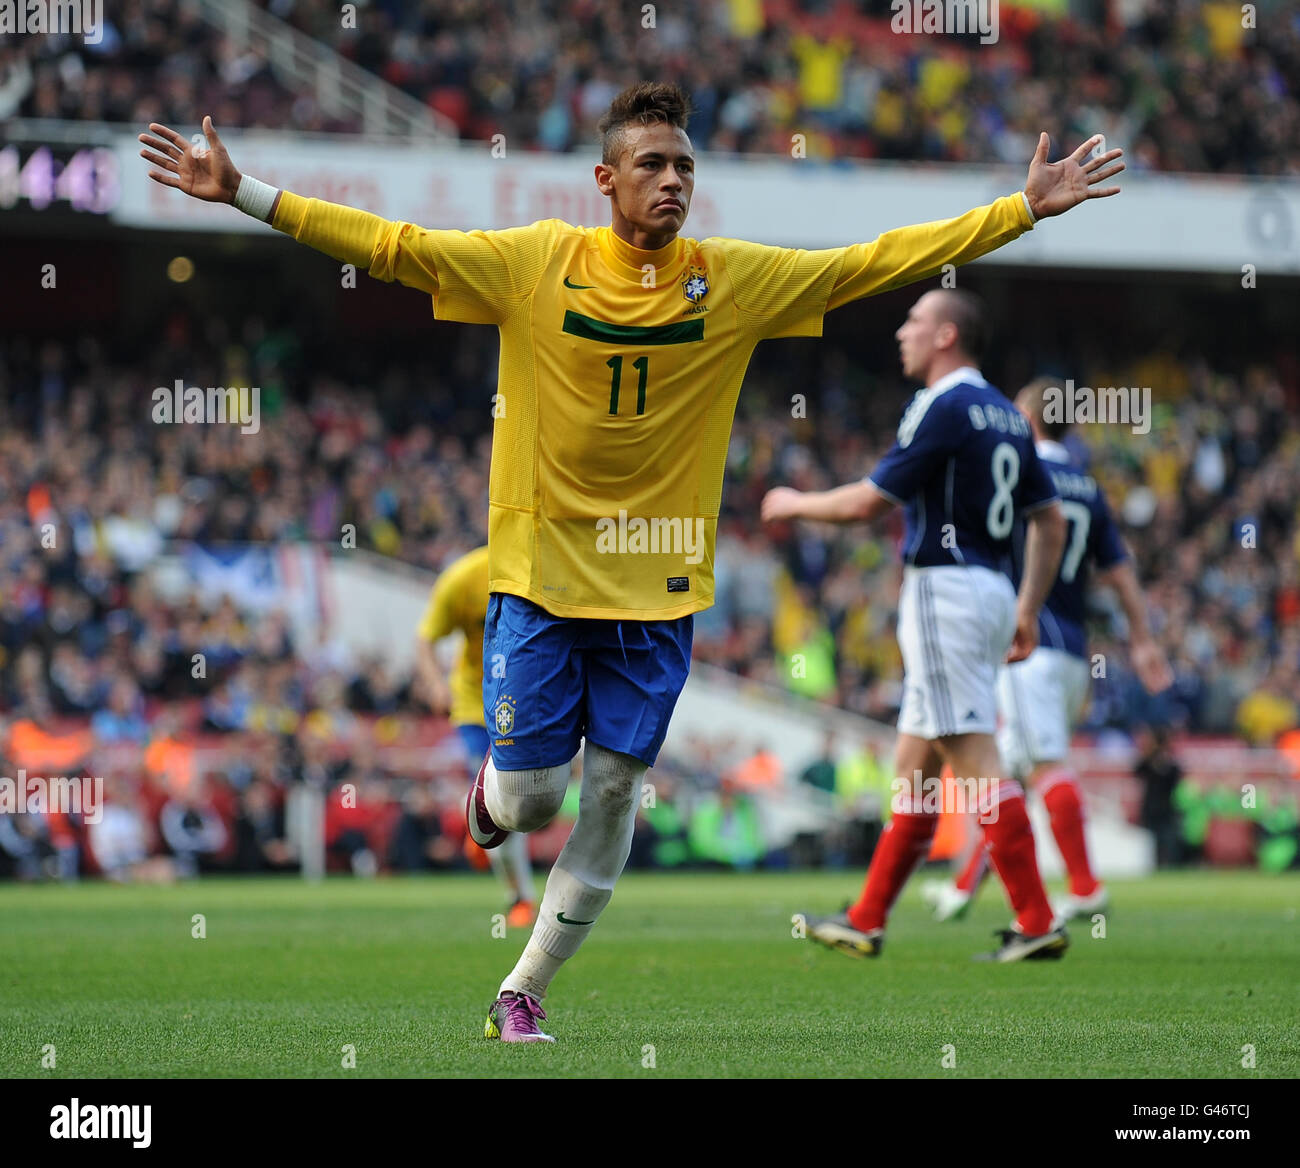 Brazil's Neymar celebrates scoring the opening goal of the game against Scotland Stock Photo